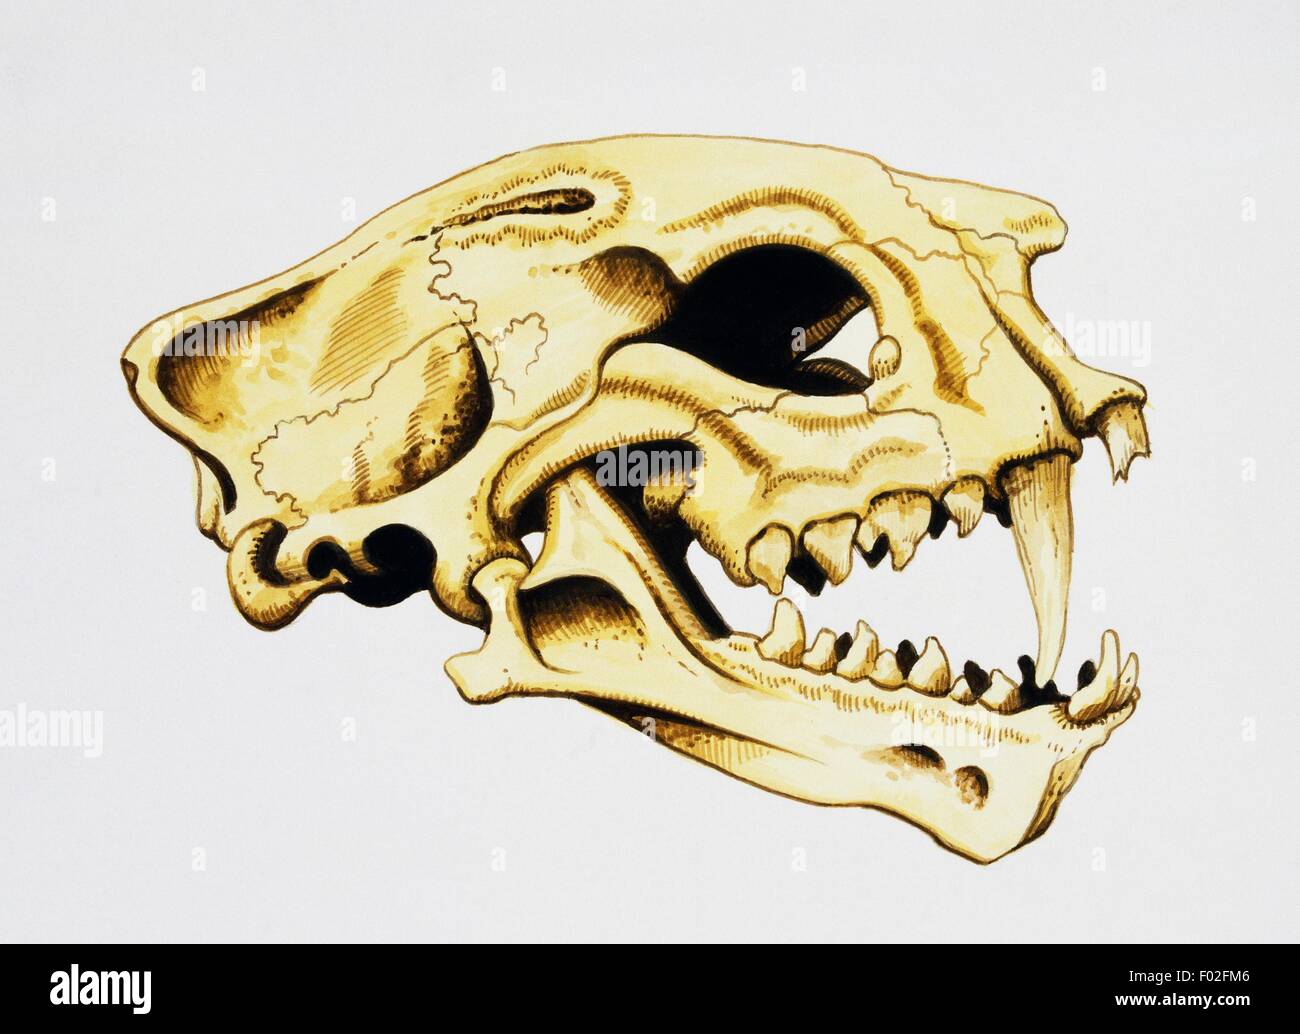 Minravus Nimravidae, crâne, Oligocene-Miocene. Illustration de Tony Jackson. Banque D'Images